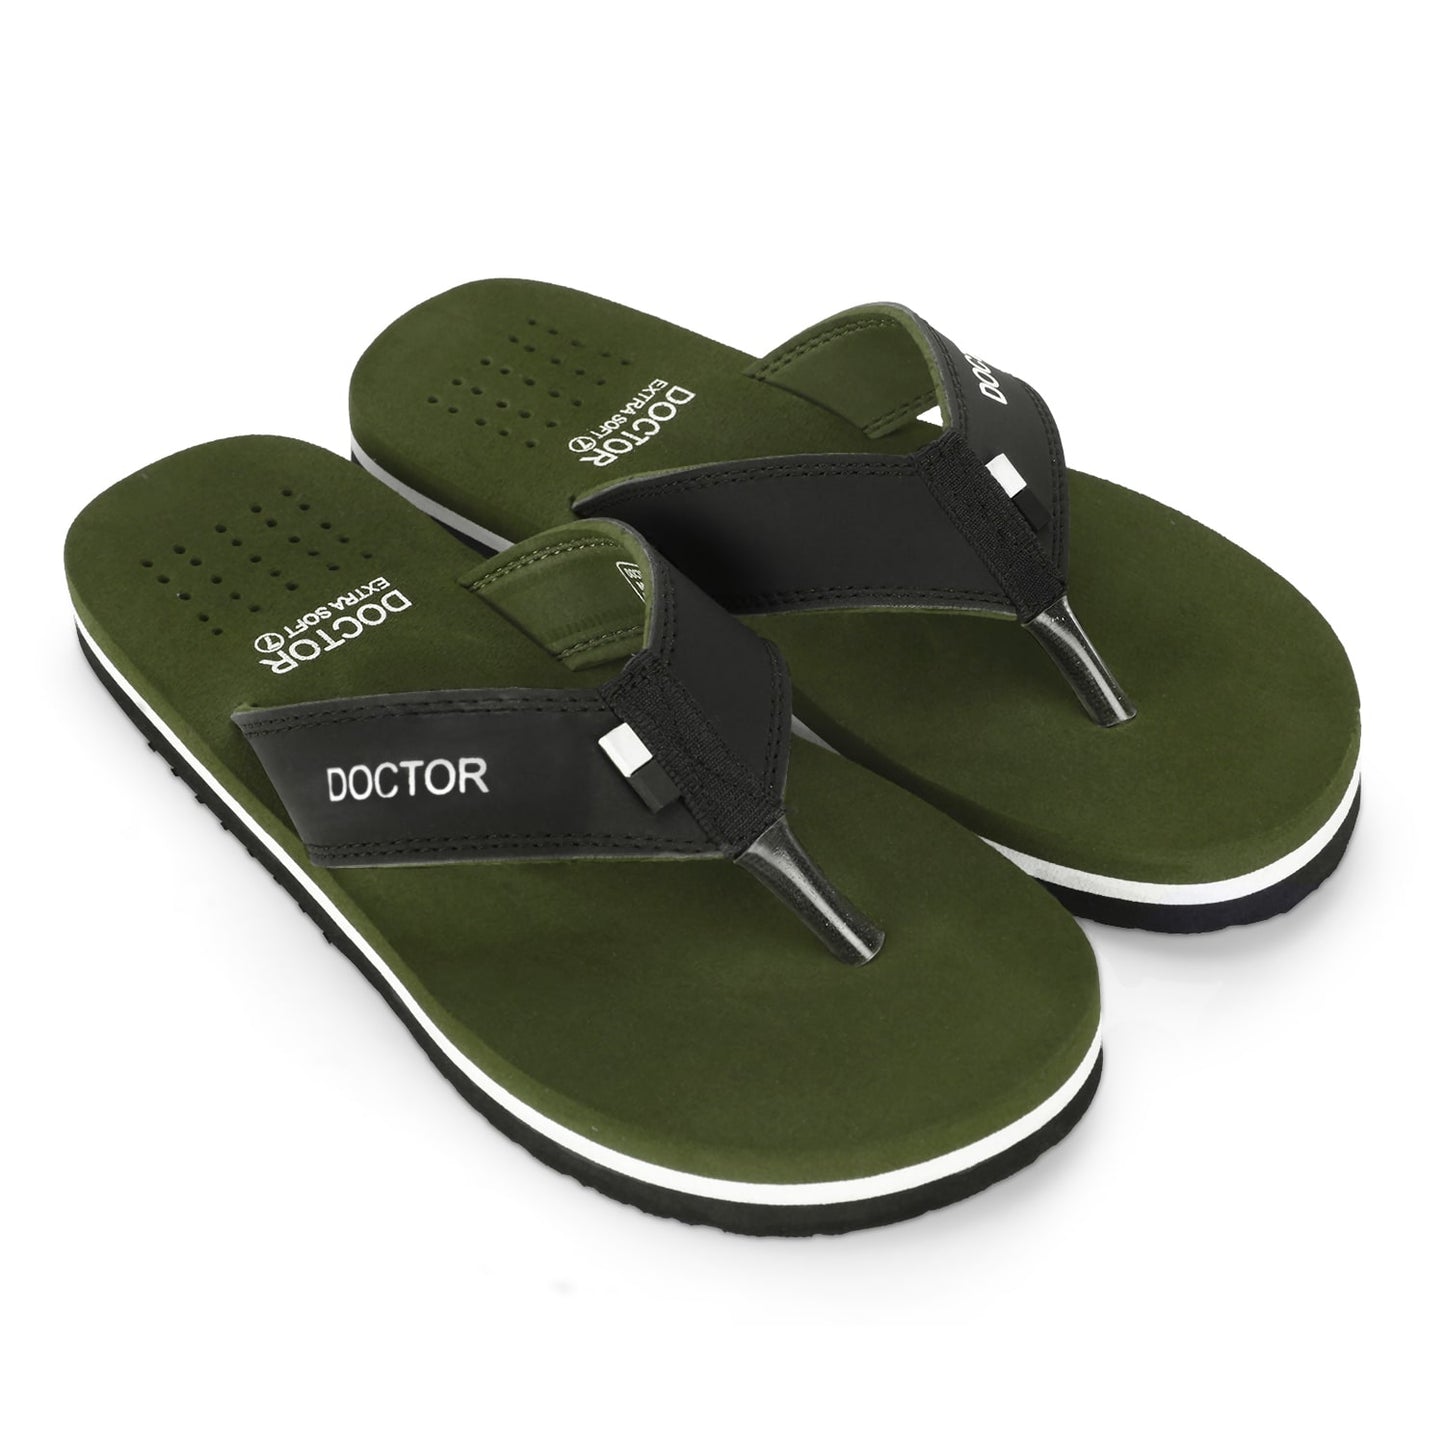 DOCTOR EXTRA SOFT D-24 Men's Sliders, Skin Friendly EVA Provides Optimum Support To Heel